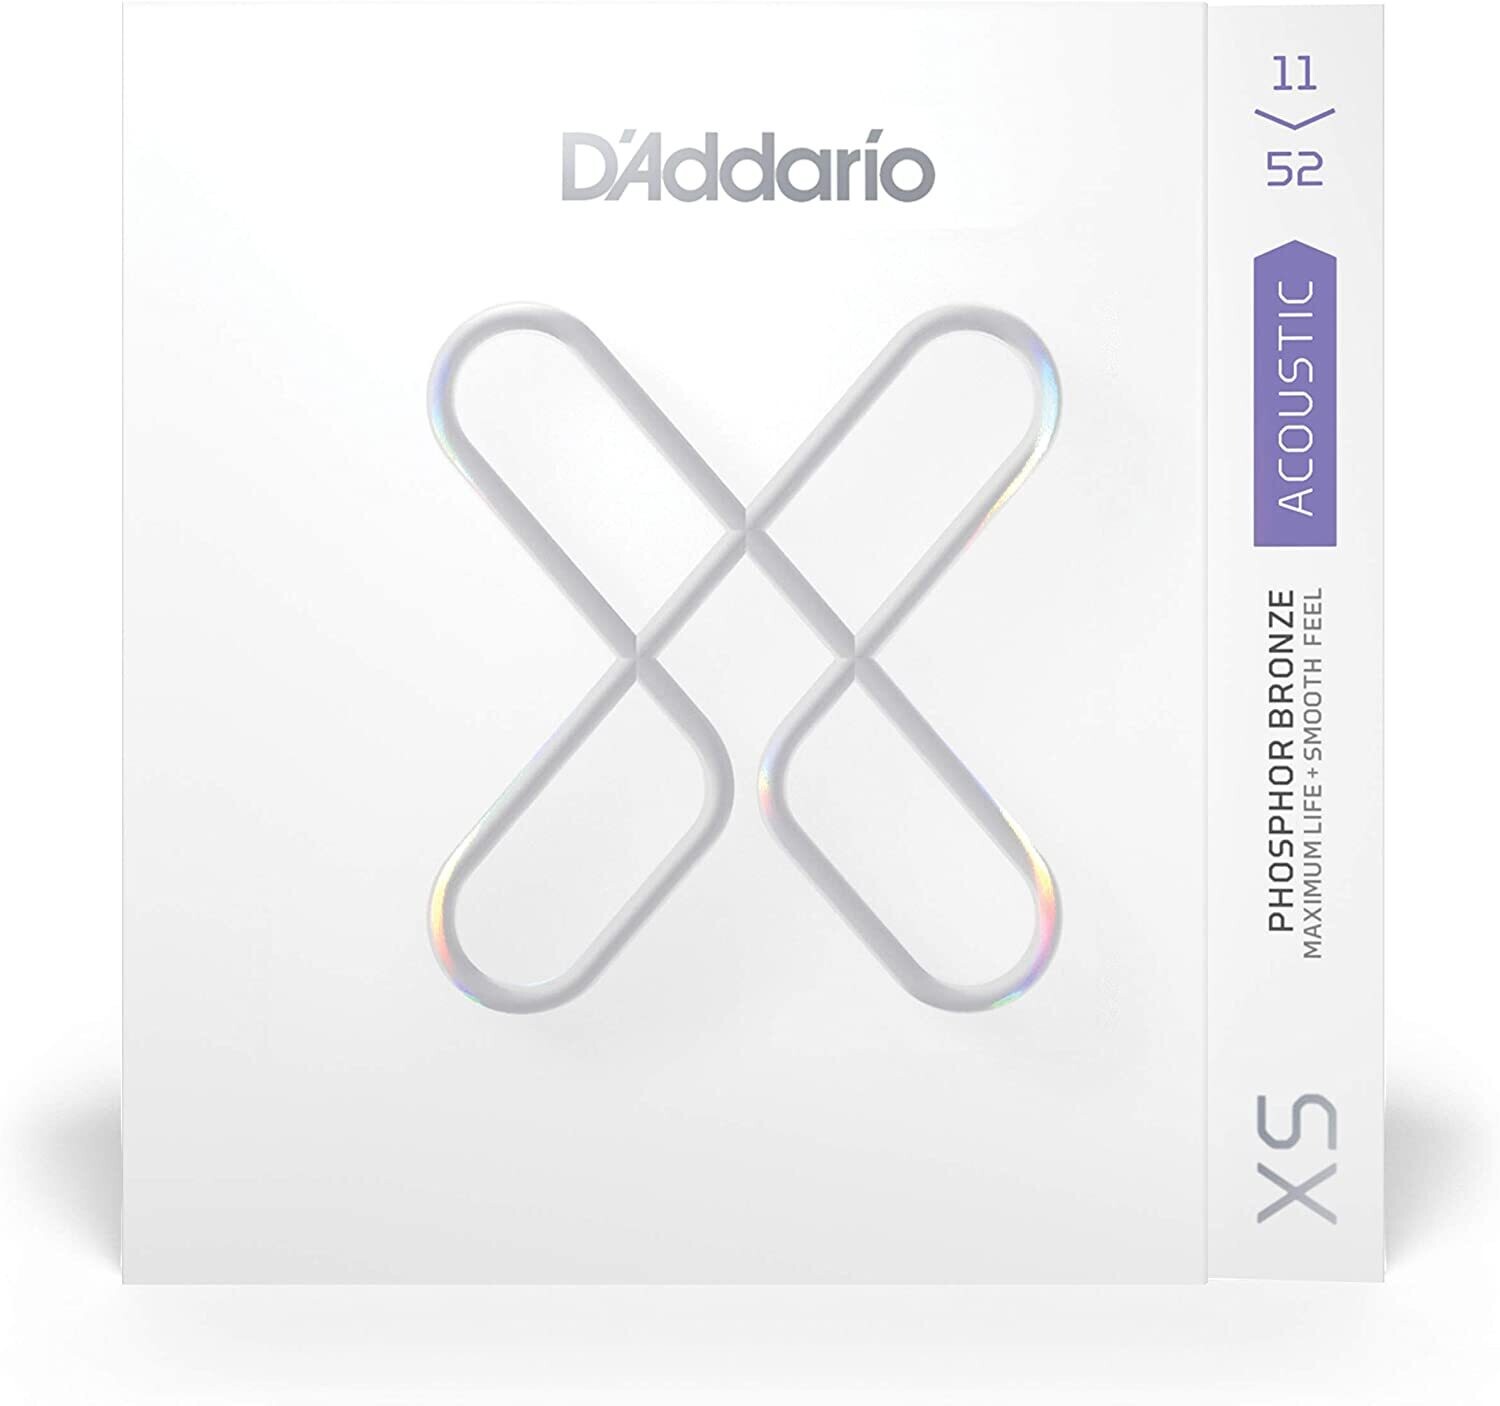 D'Addario XS Acoustic Guitar Strings Phosphor Bronze, Custom Light, 11-52